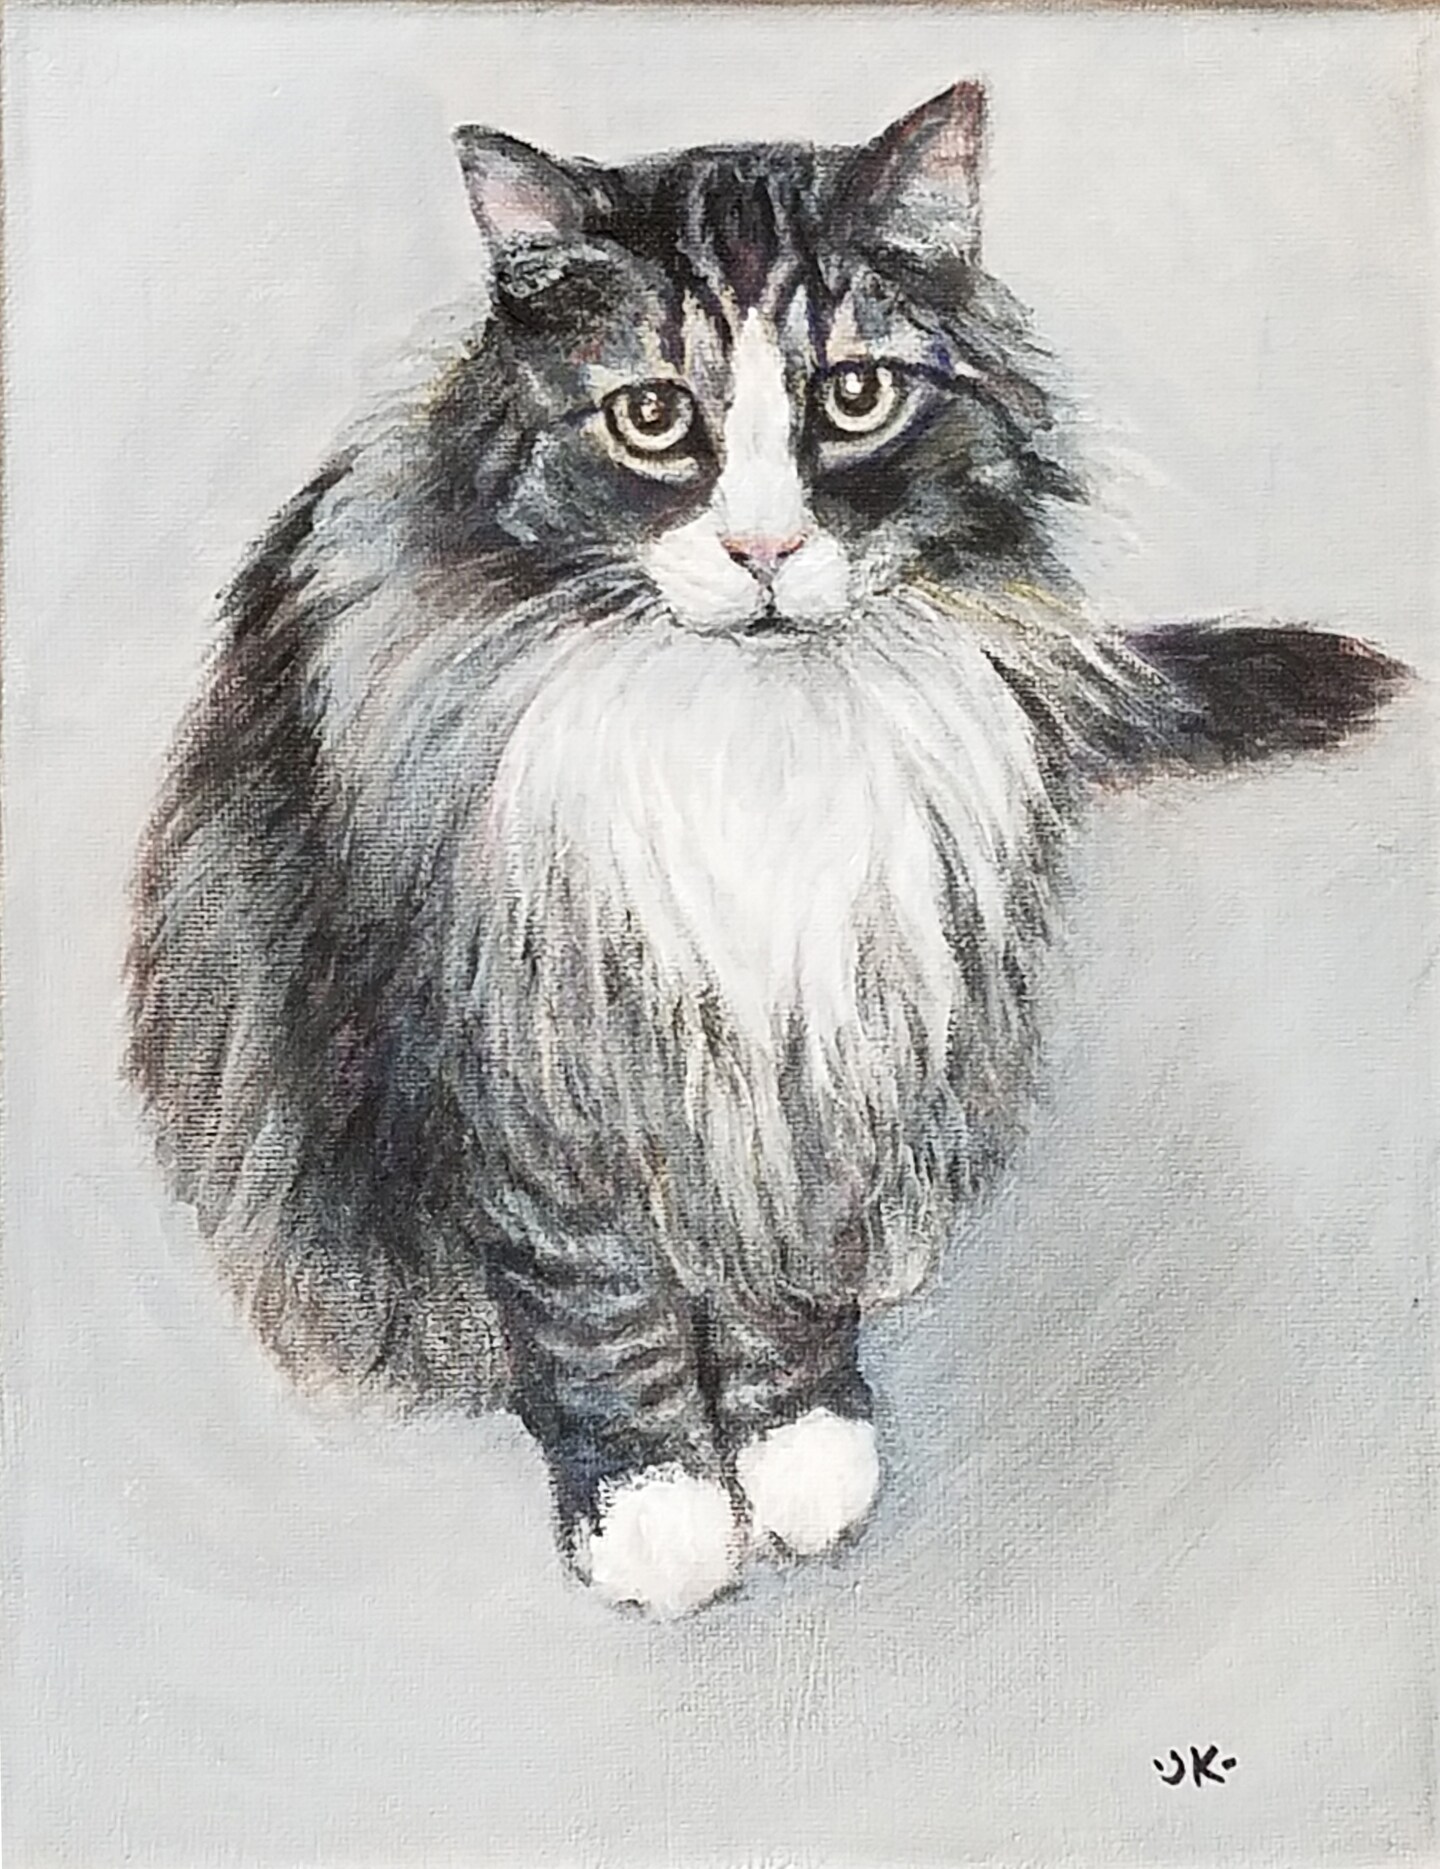 Hand-painted cat Portraits on canvas, 8" x 10" canvas, Custom Pet Painting from photo, Commission Pet art, Dog portrait, acrylic paint 265112765520609280